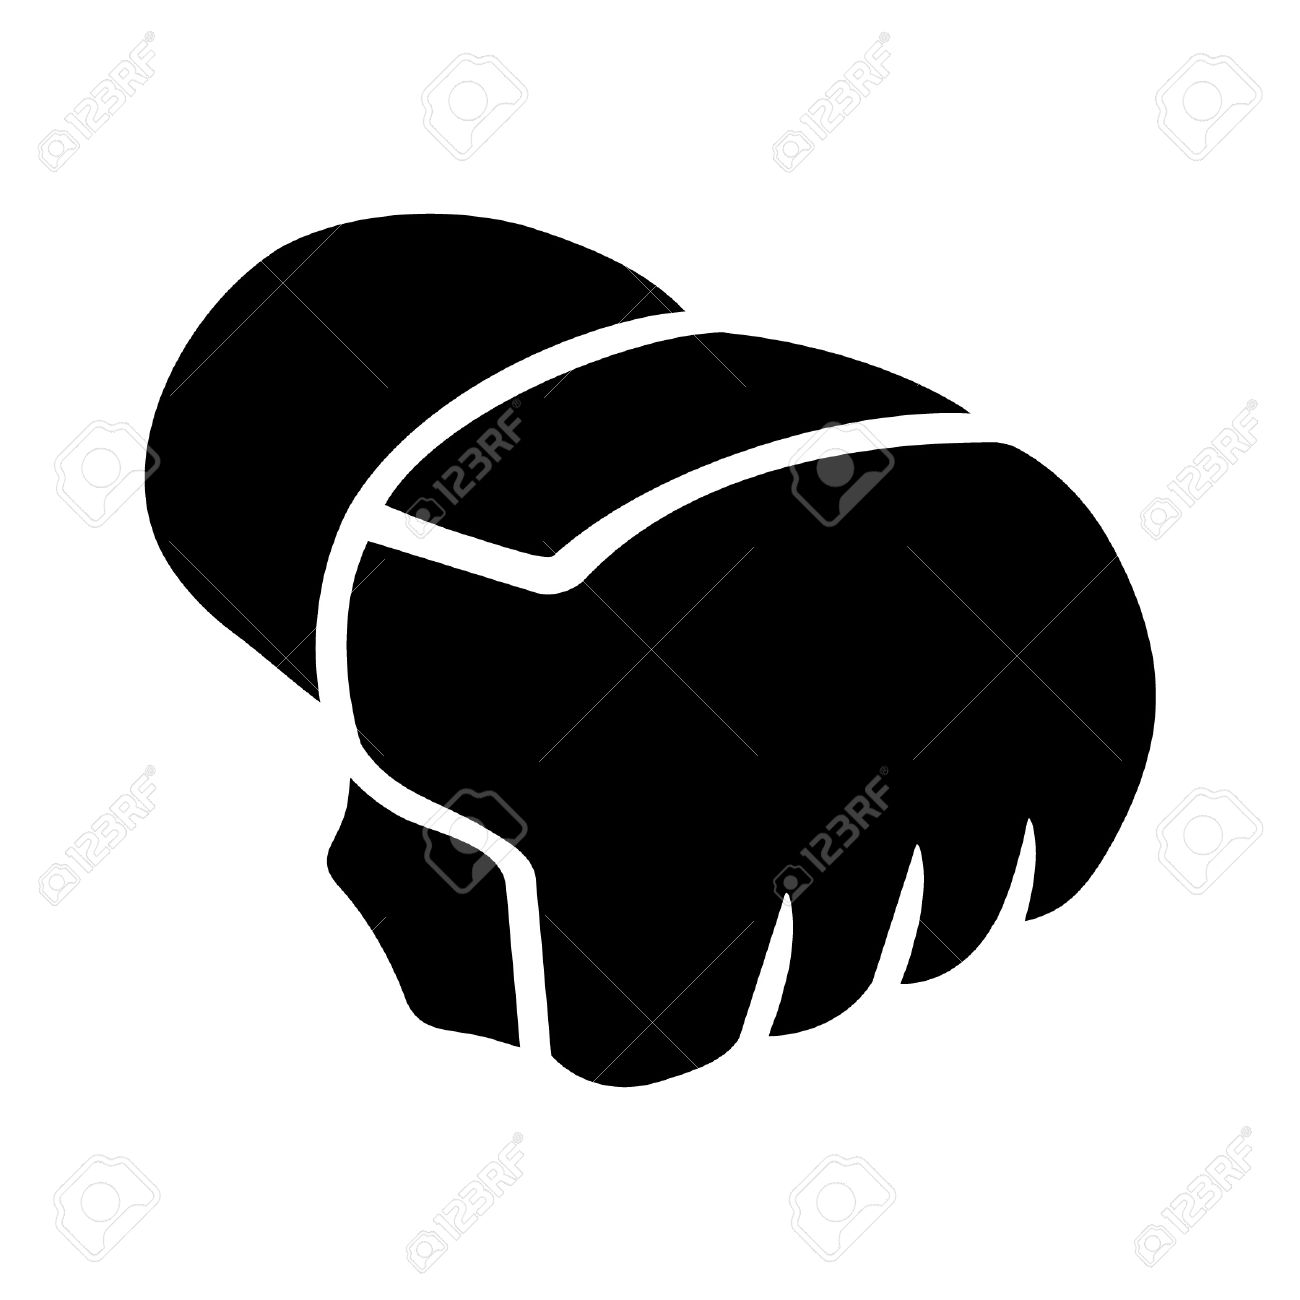 Mixed Martial Arts - MMA - gloves flat icon Stock Vector - 42411107